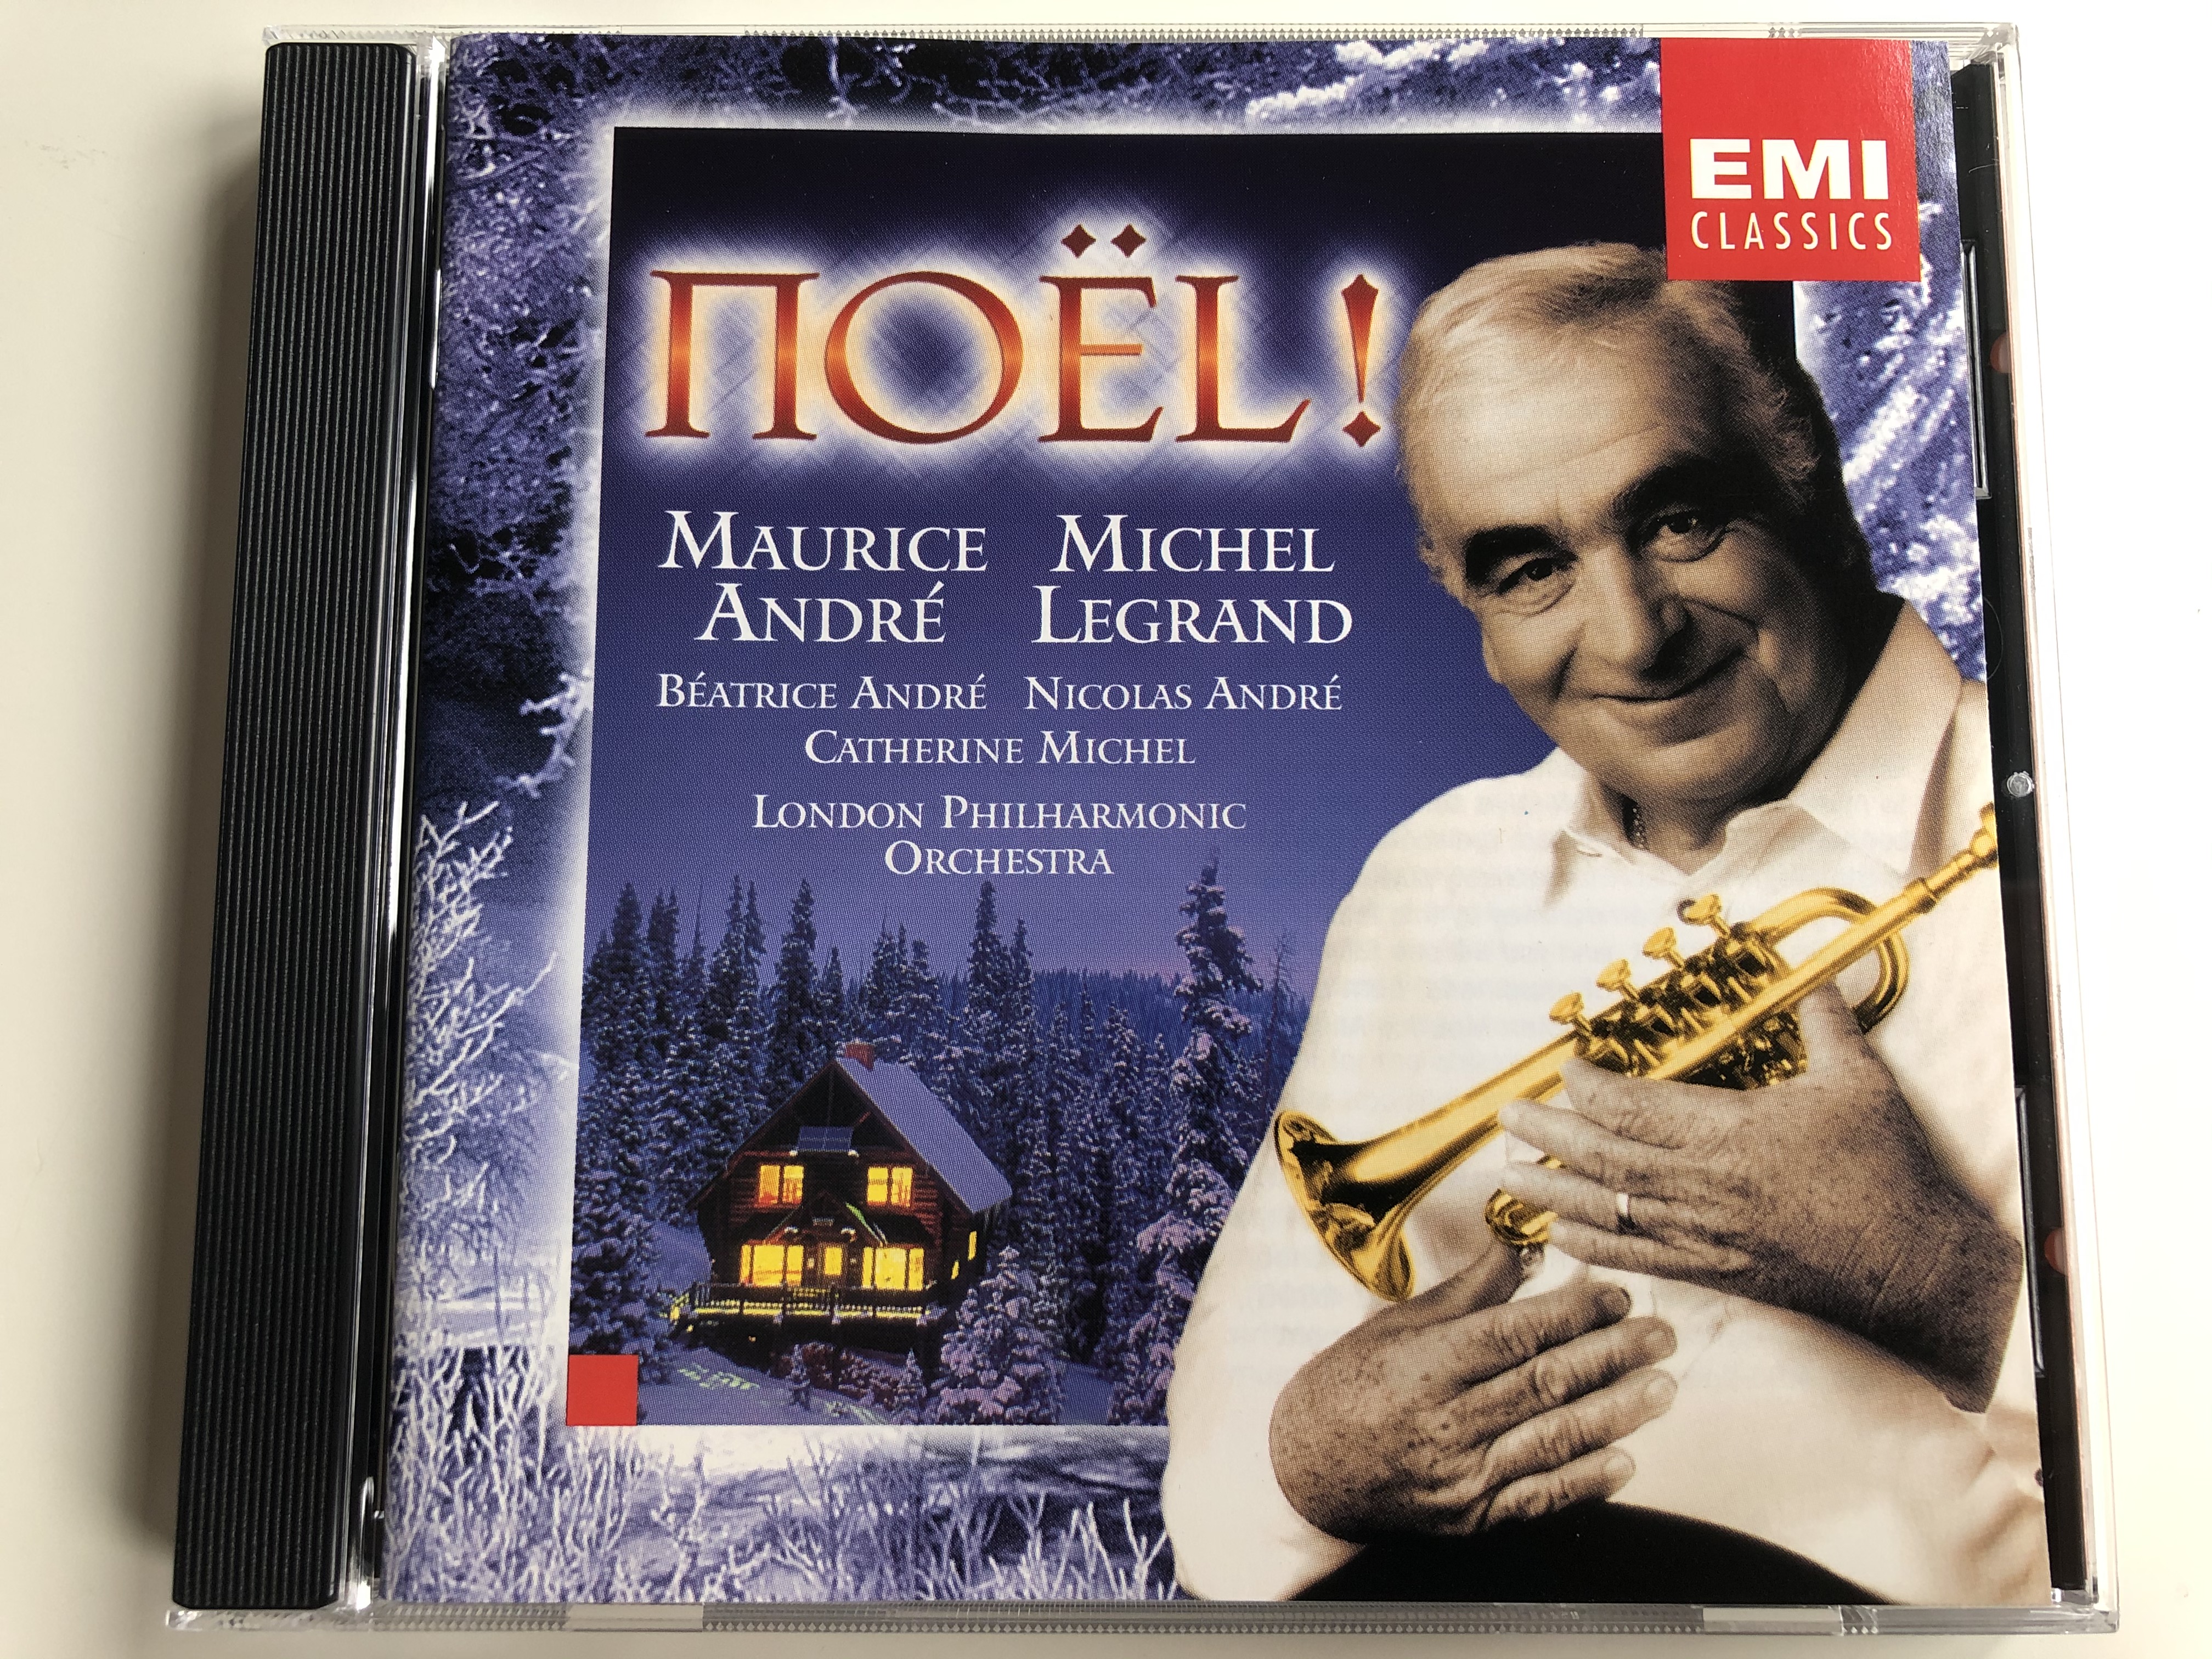 noel-maurice-andr-michel-legrand-beatrice-andre-nicolas-andre-catherine-michel-london-philharmonic-orchestra-emi-classics-audio-cd-1998-stereo-5-56751-2-1-.jpg